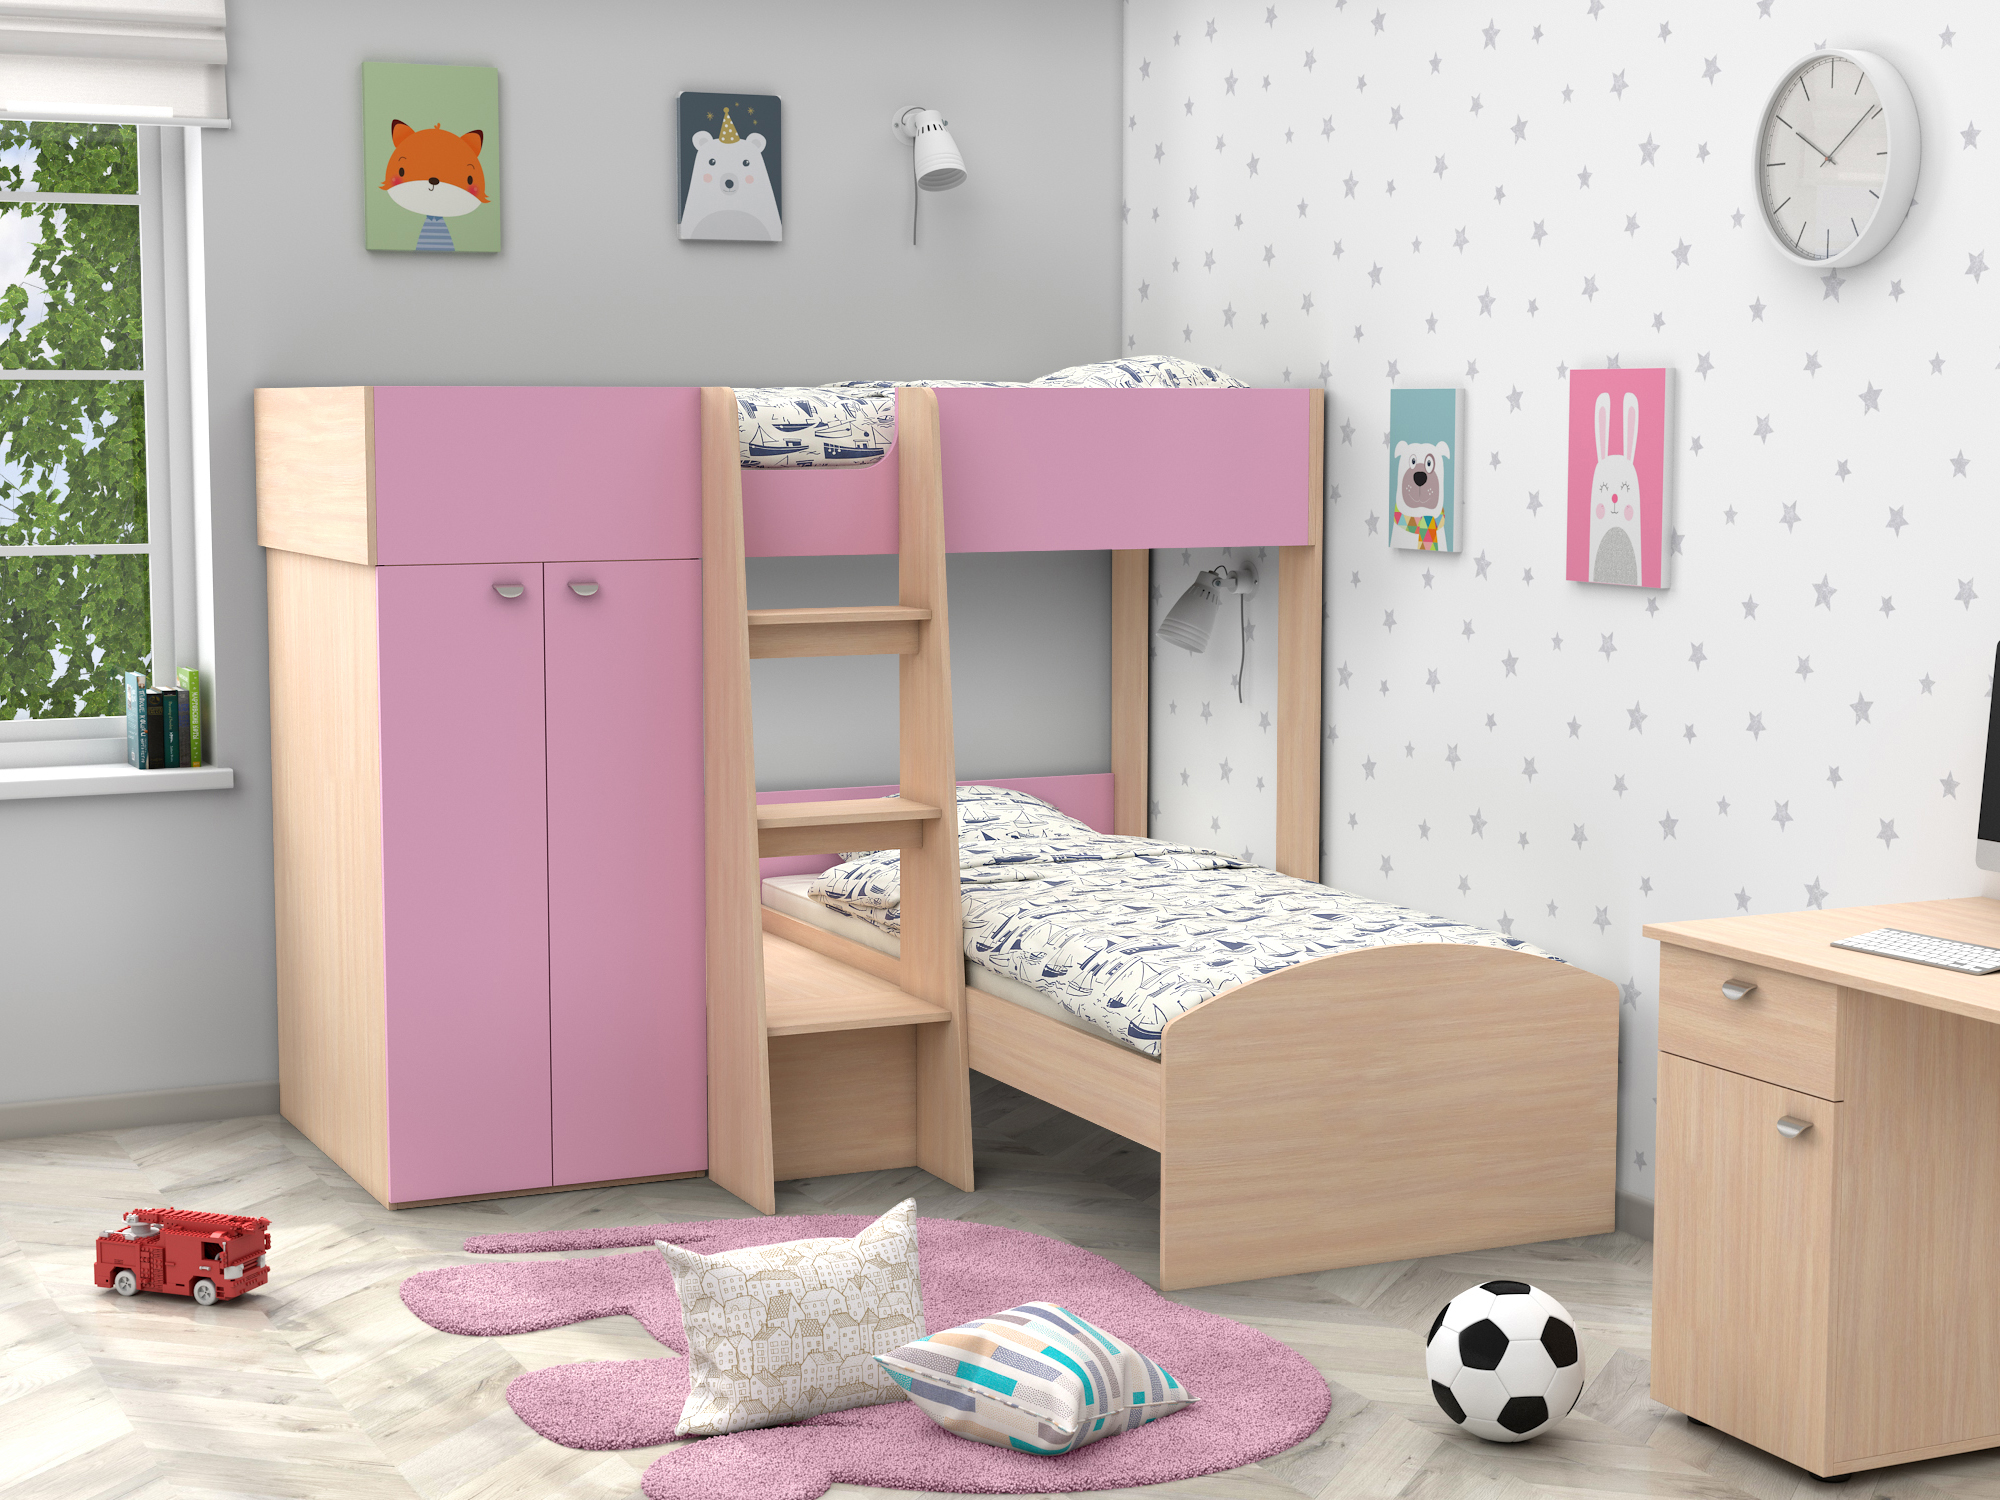 Двухъярусная кровать Golden Kids-4 (90х200) Розовый, Белый, Бежевый, ЛДСП двухъярусная кровать golden kids 4 90х200 голубой бежевый лдсп